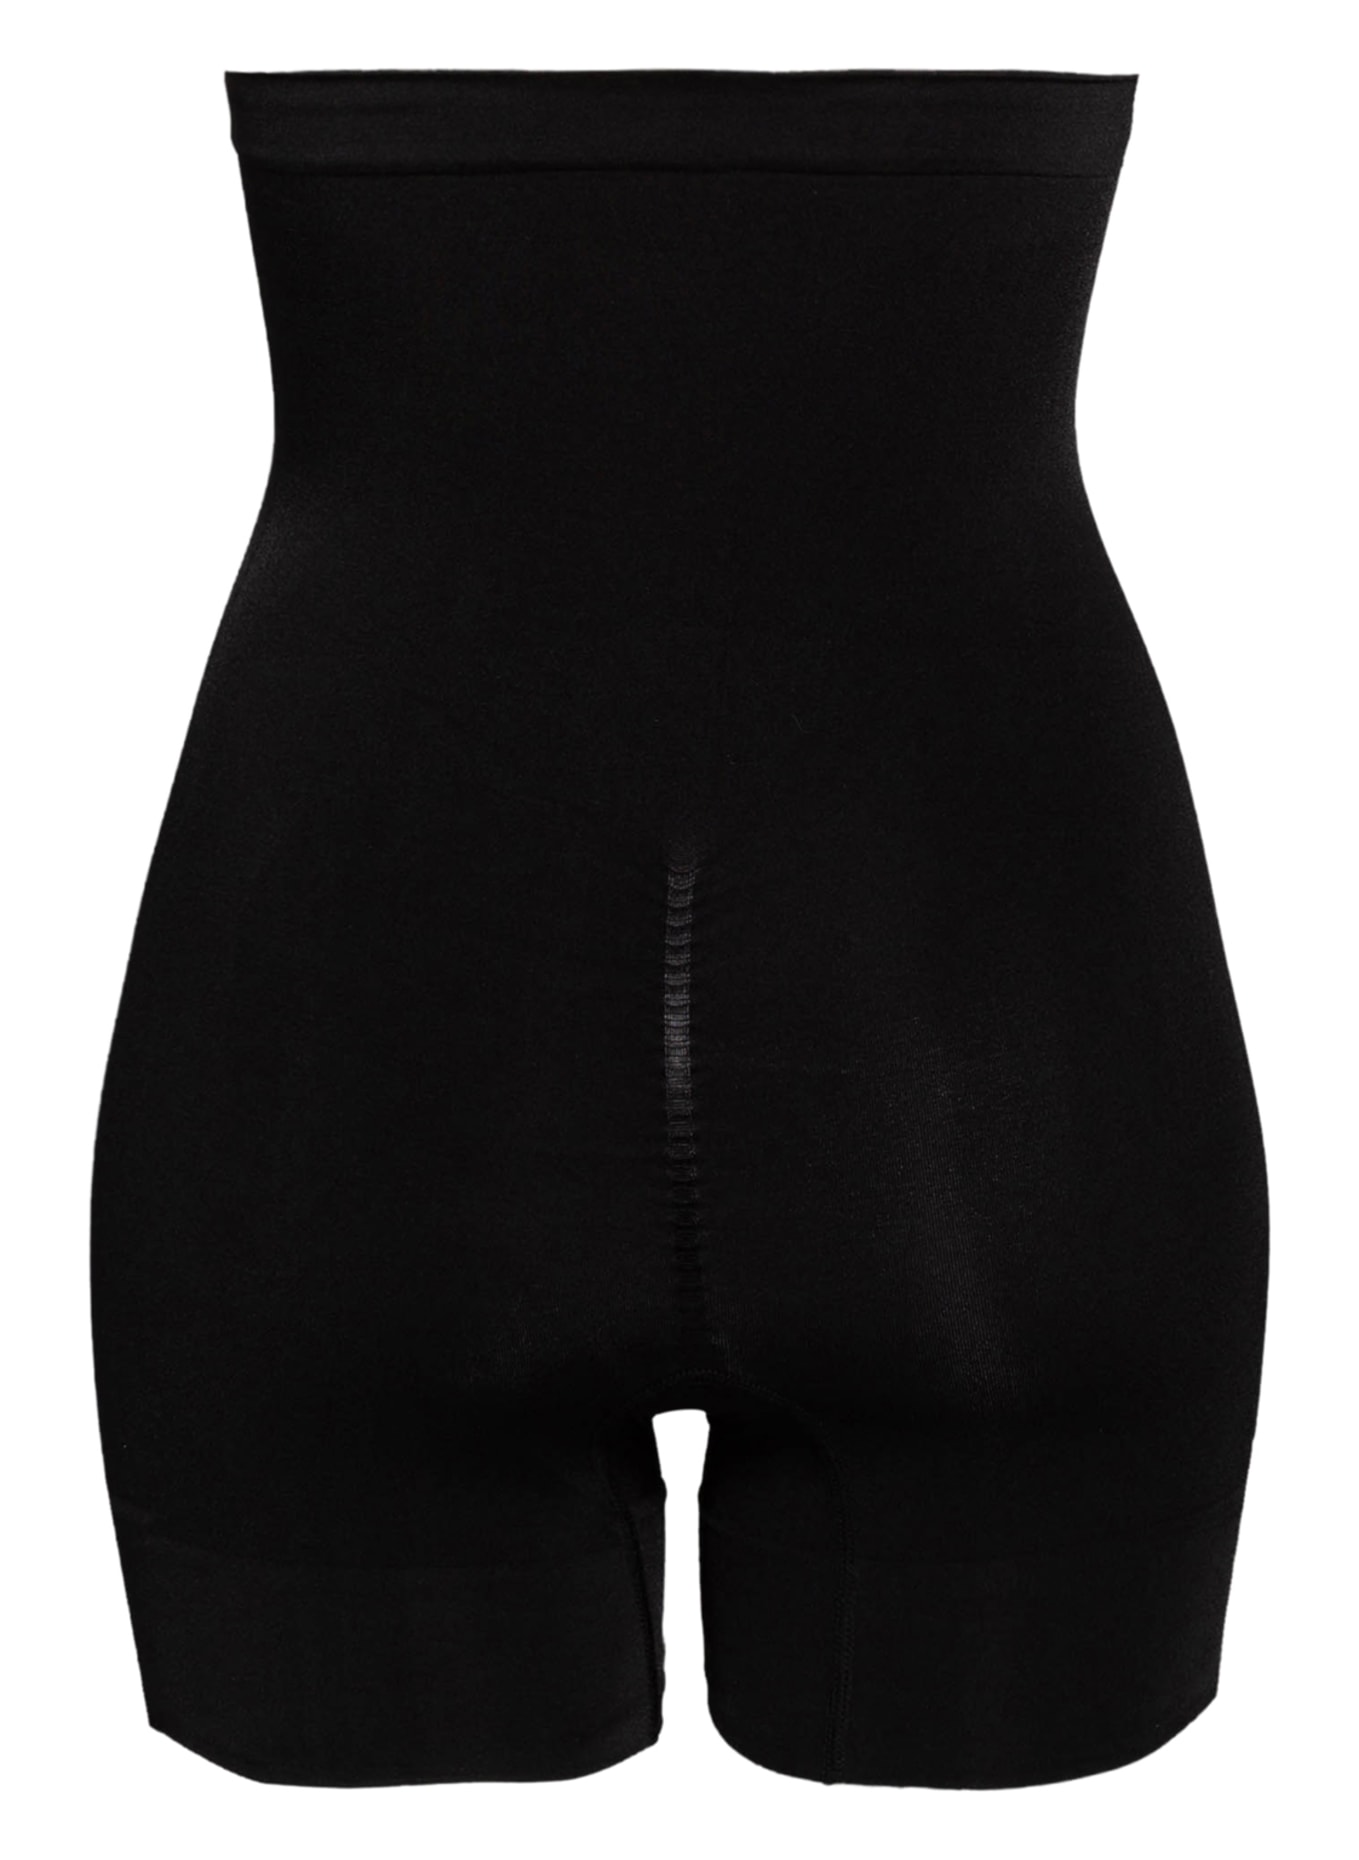 MAGIC Bodyfashion Shape shorts COMFORT SHAPER with push-up effect in black